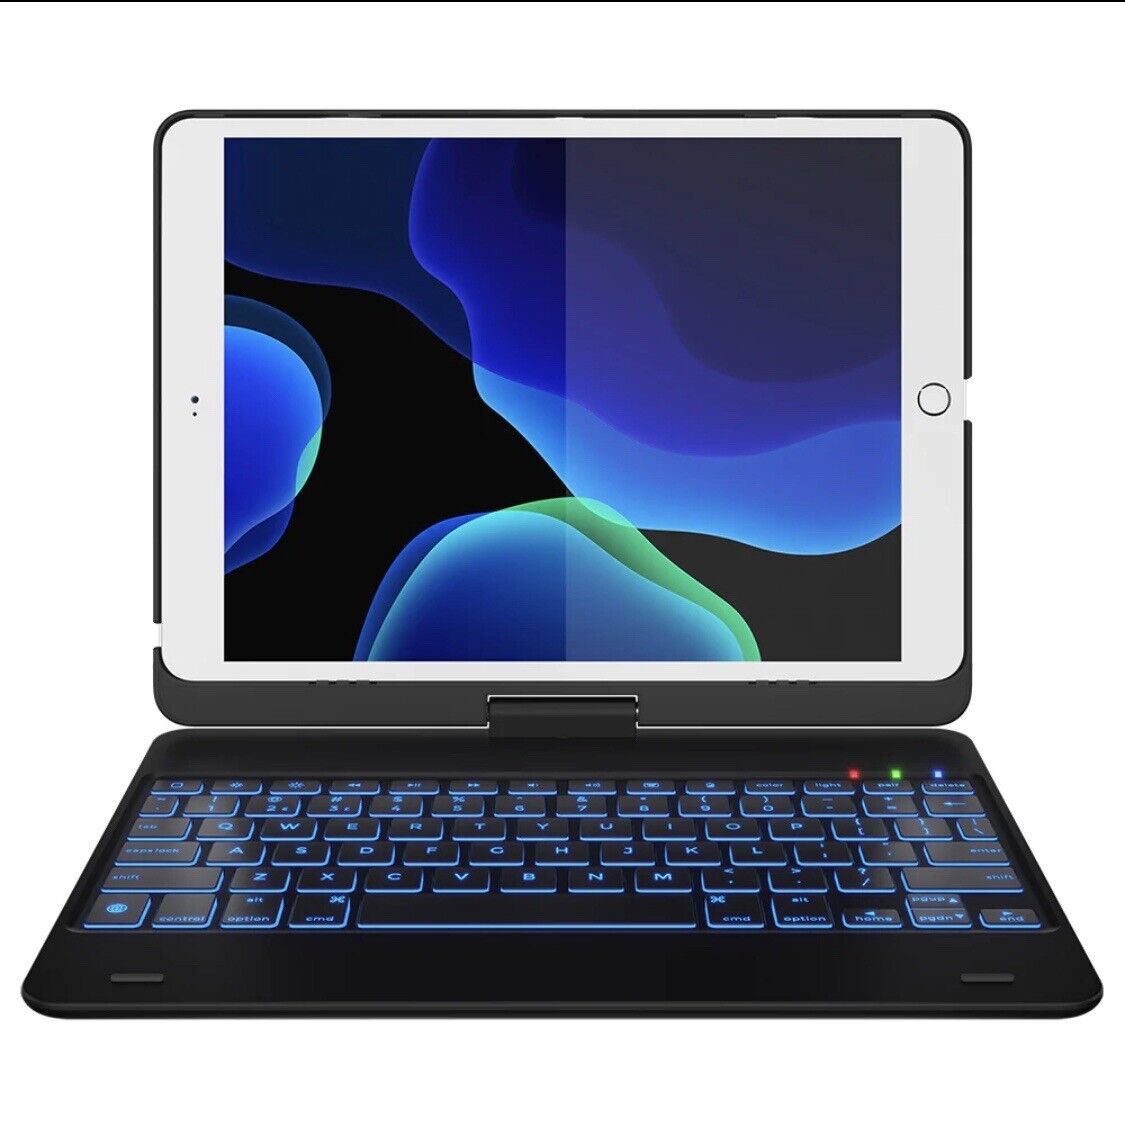 Typecase Flexbook 6-in-1 iPad Keyboard Case For iPad 10.2 in/Pro 10.5/iPad Air 3